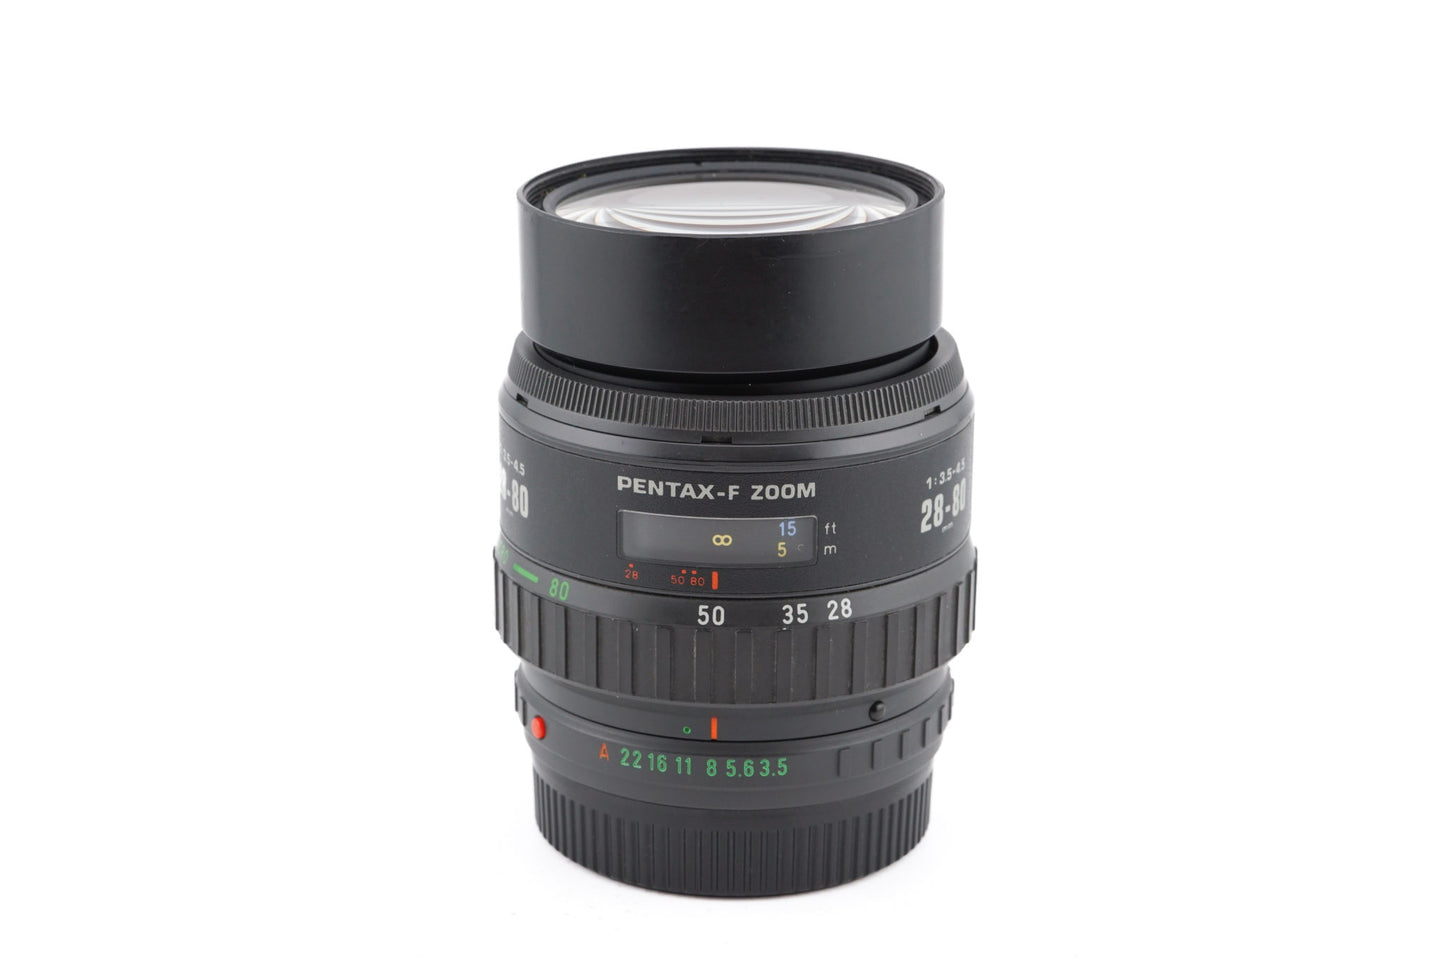 Pentax 28-80mm f3.5-4.5 Pentax-F Zoom - Lens